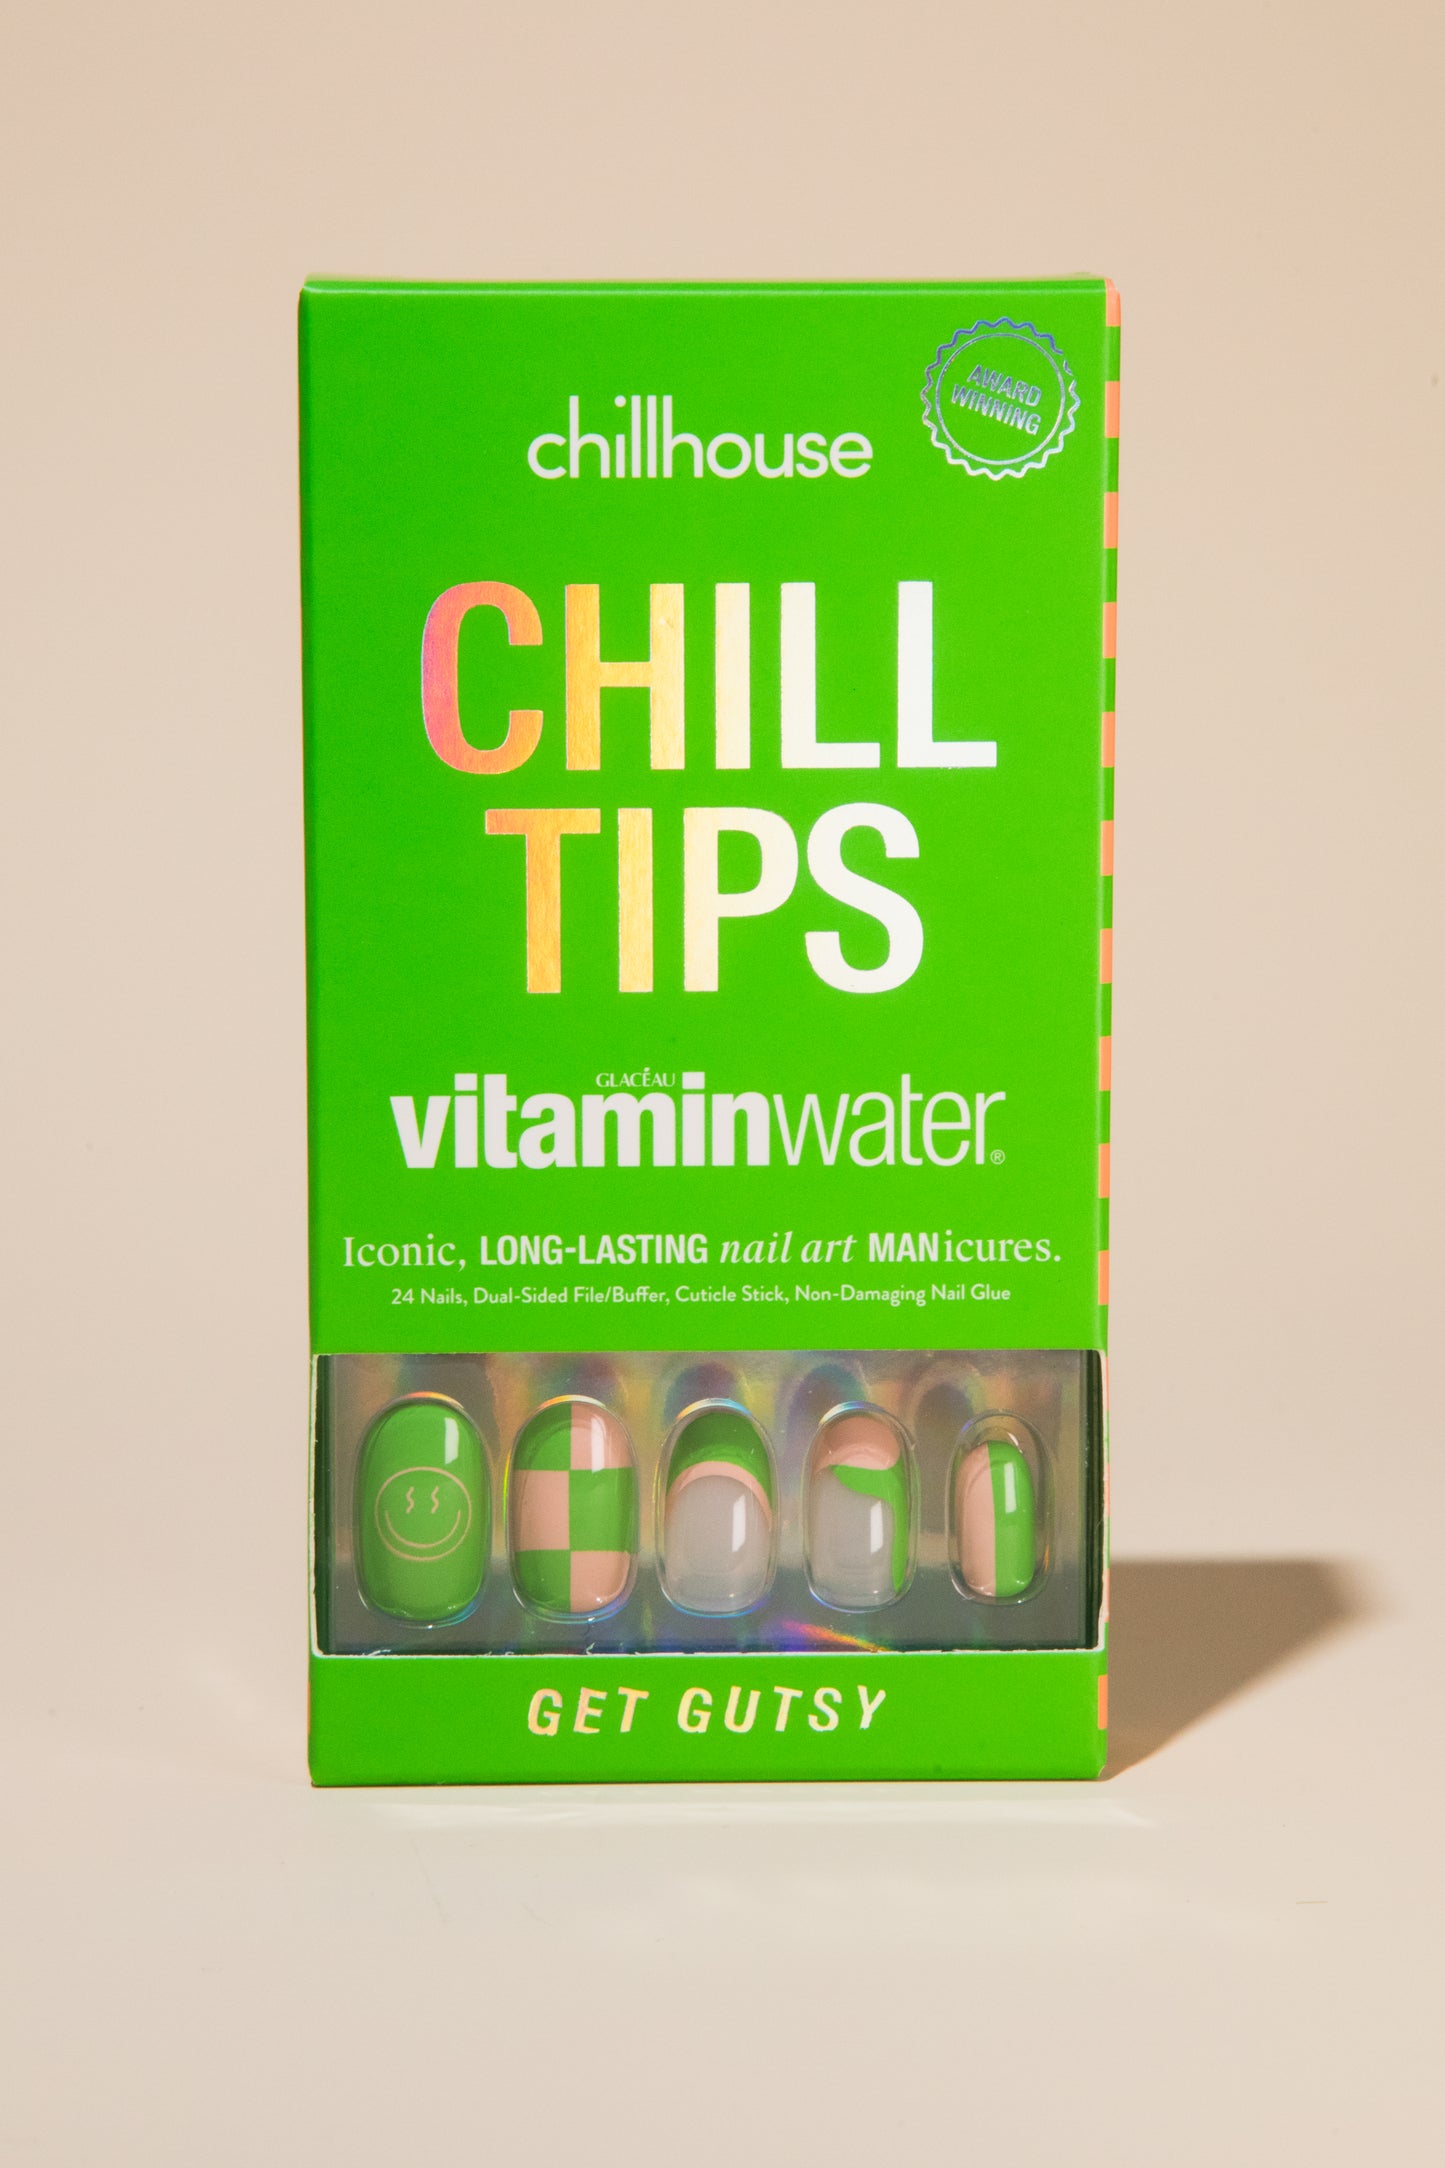 vitaminwater® - Get Gutsy